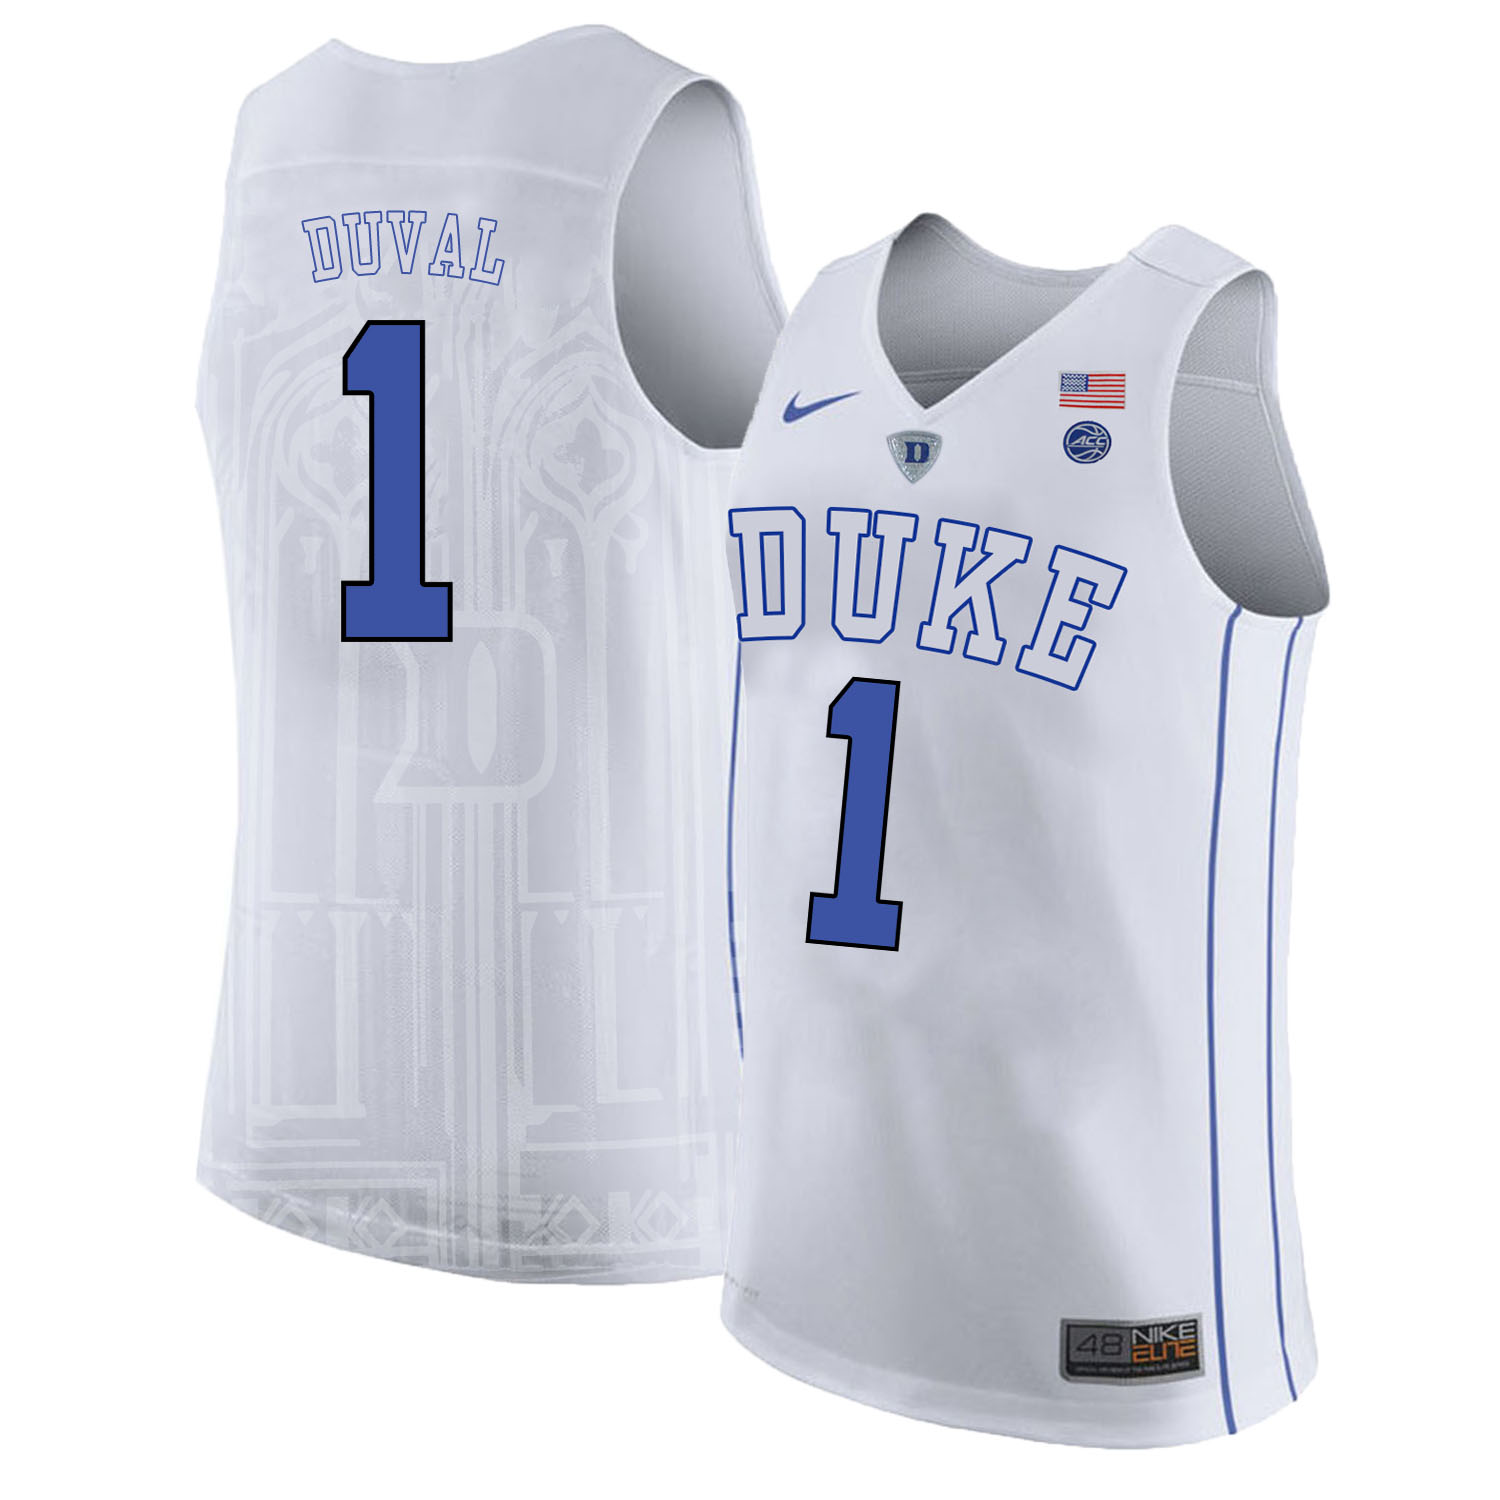 Duke Blue Devils 1 Trevon Duval White Nike College Basketabll Jersey